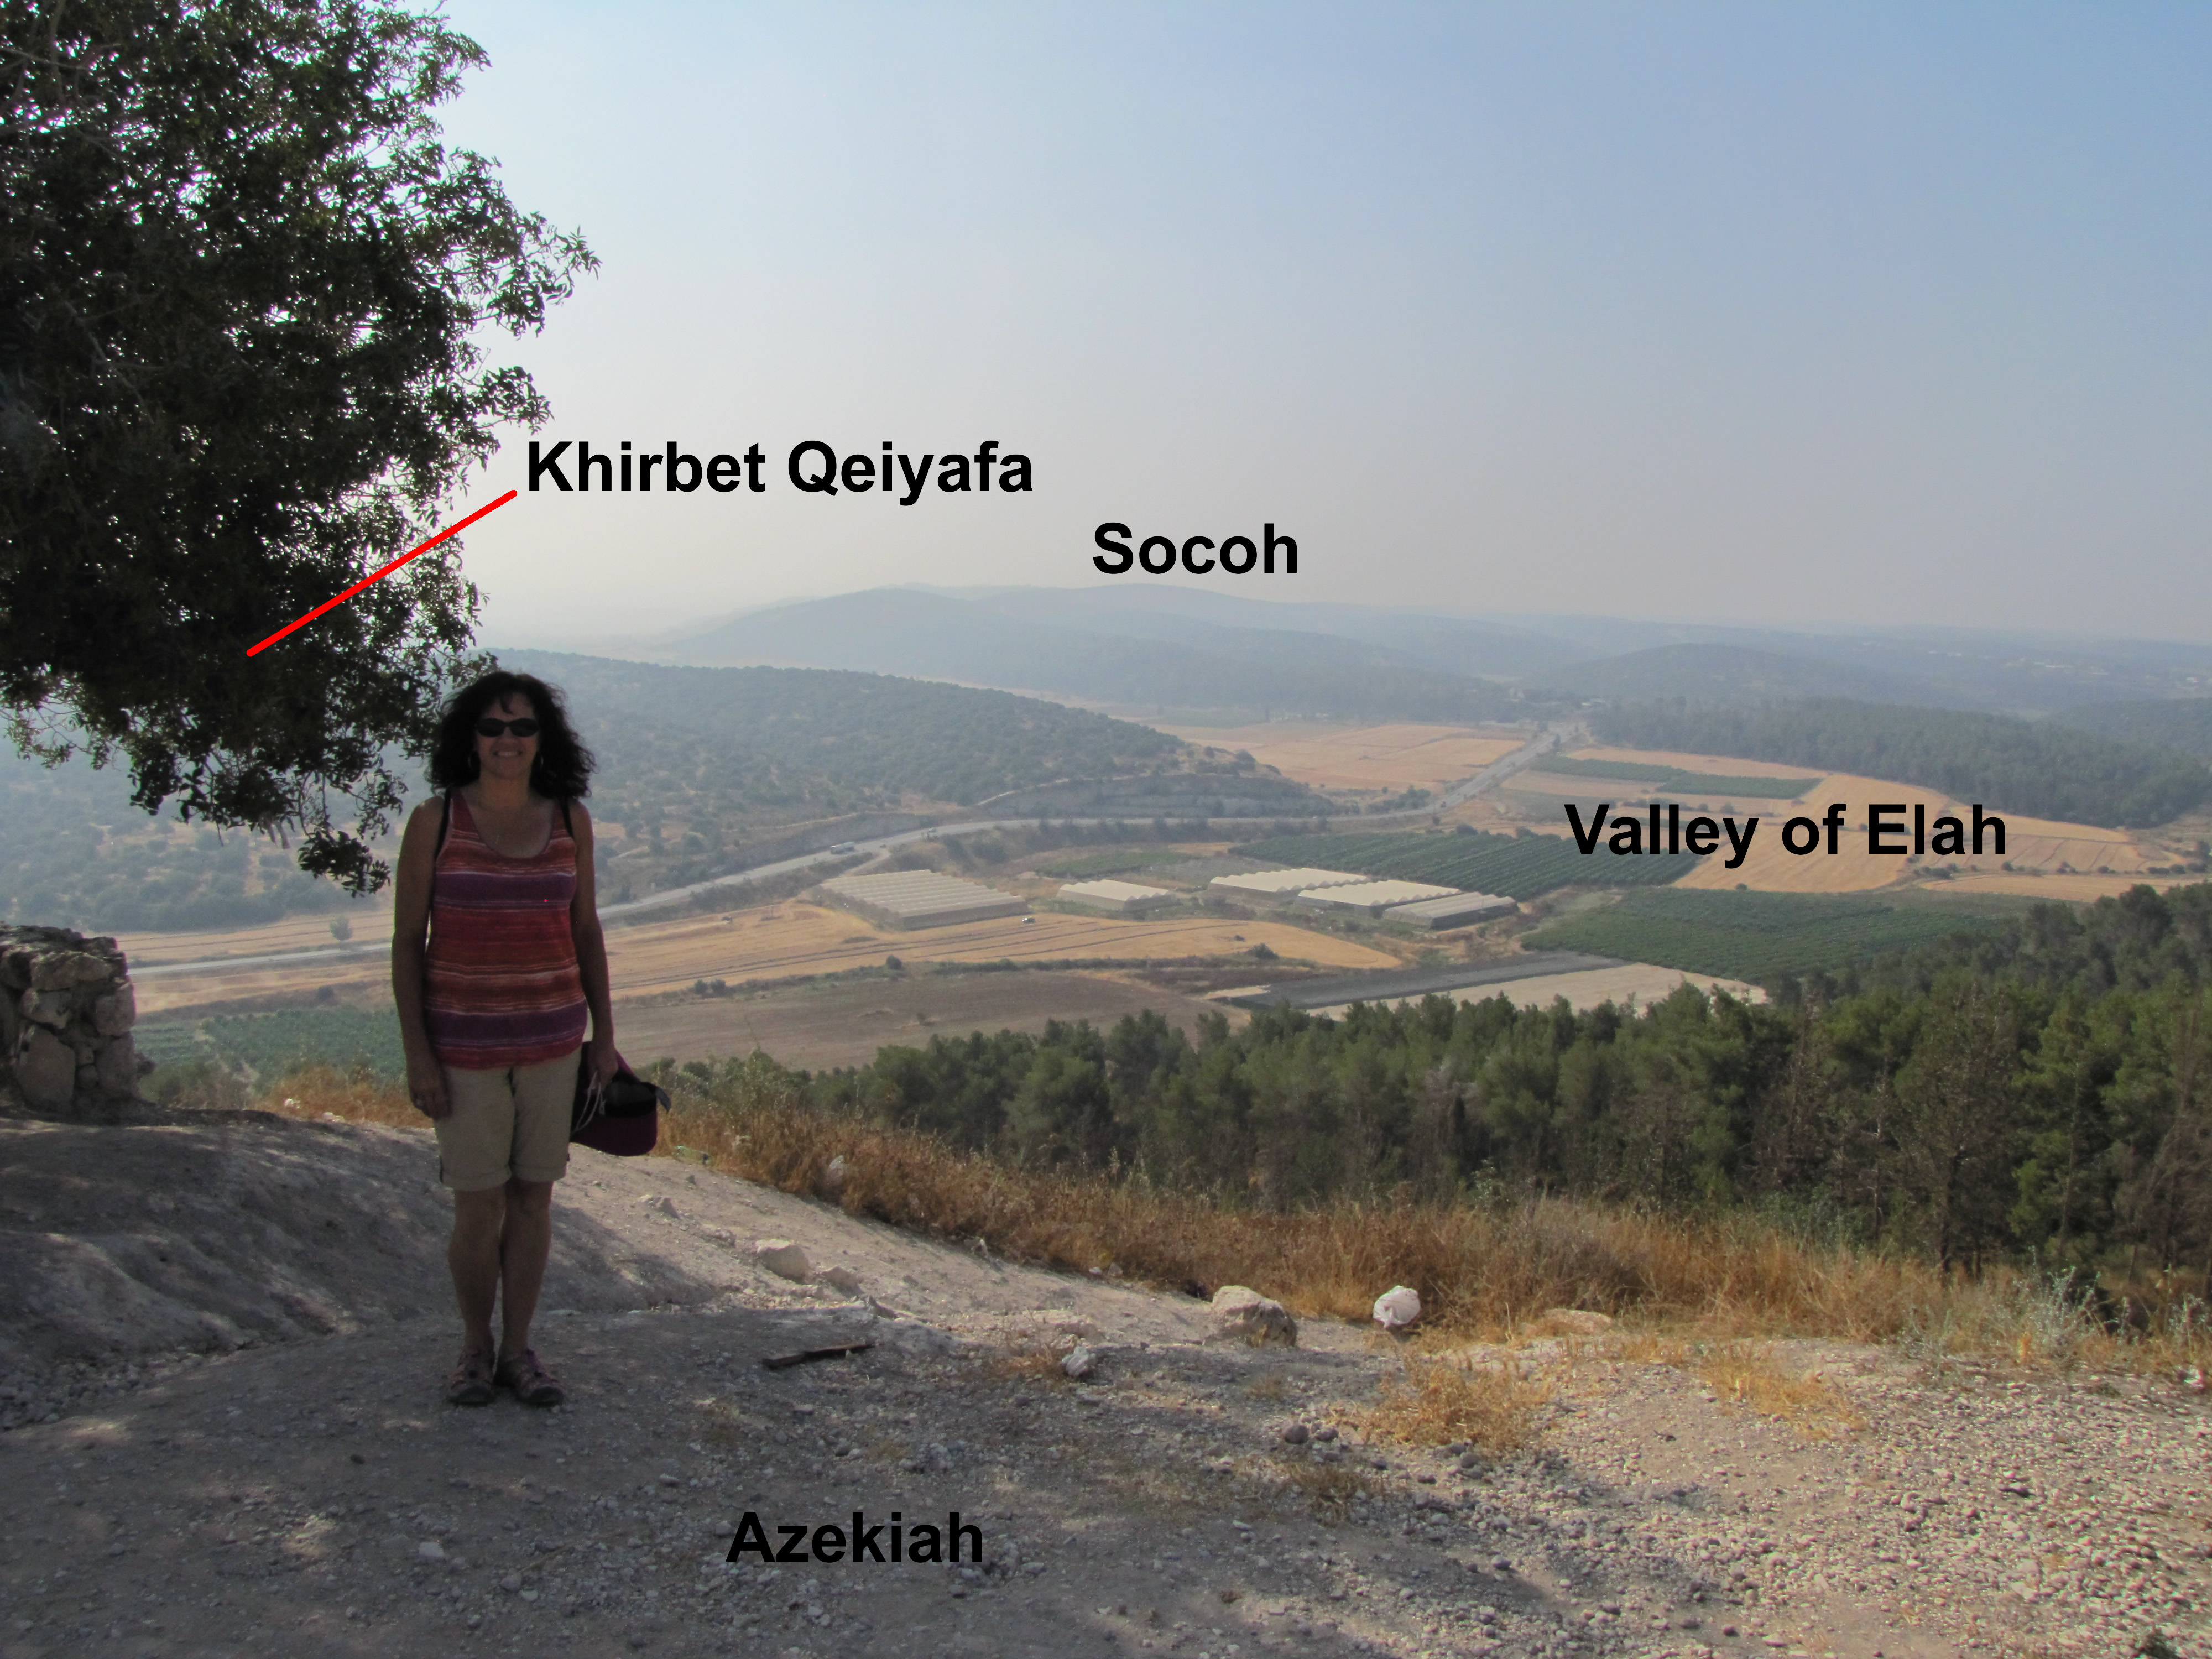 Khirbet Qeiyafa in the distance